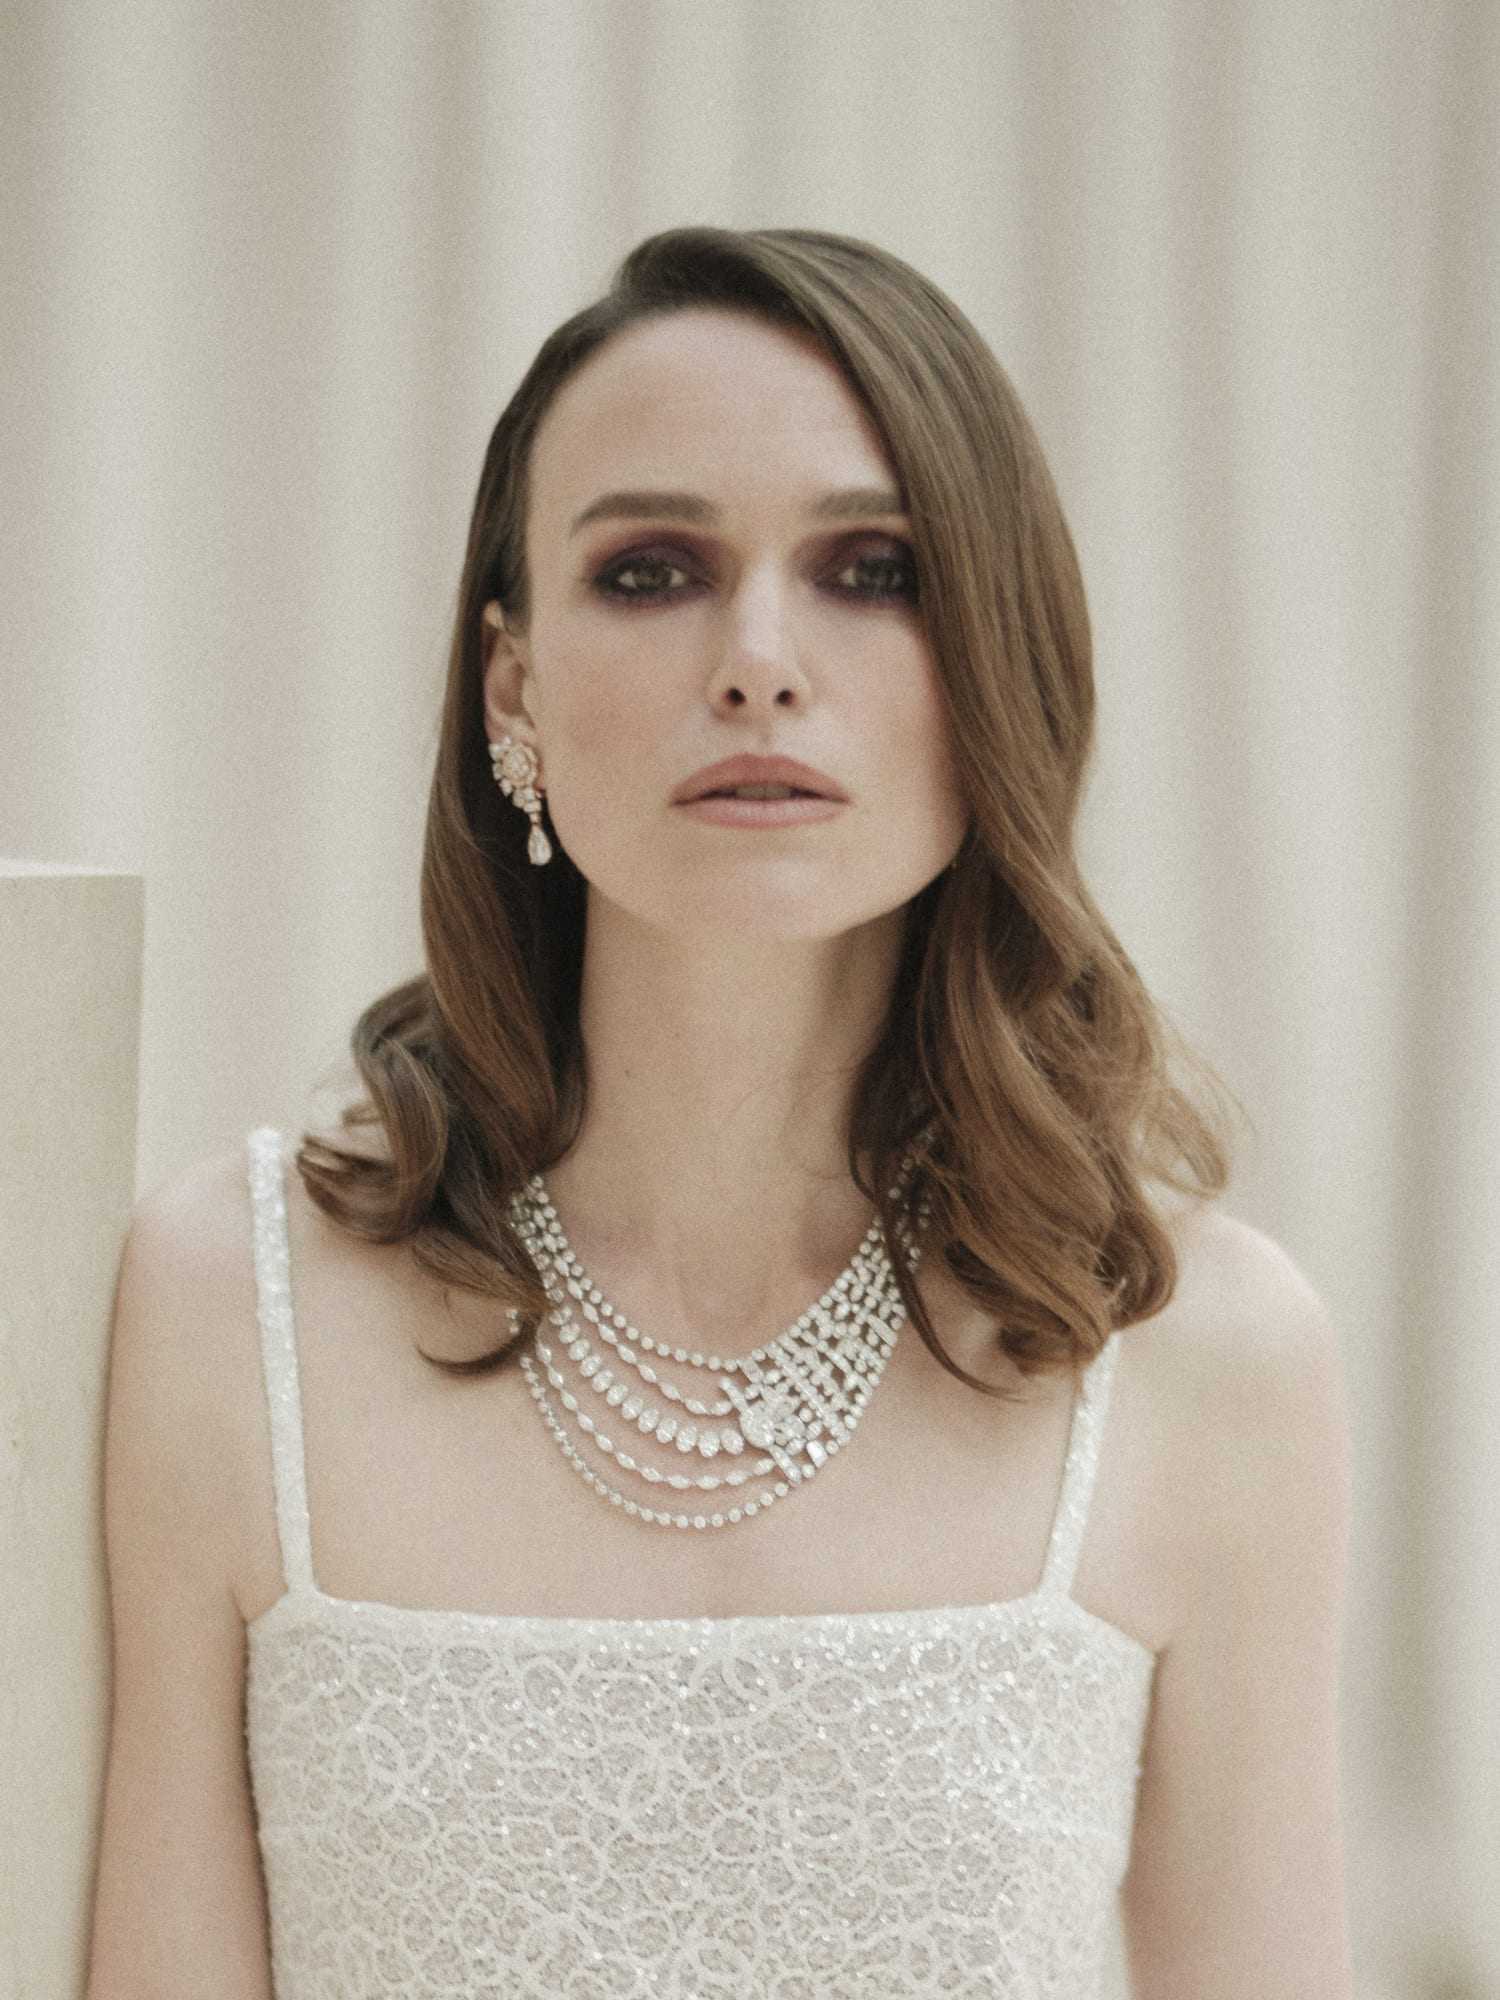 Inside Chanel's glamorous Tweed de Chanel high jewellery launch in